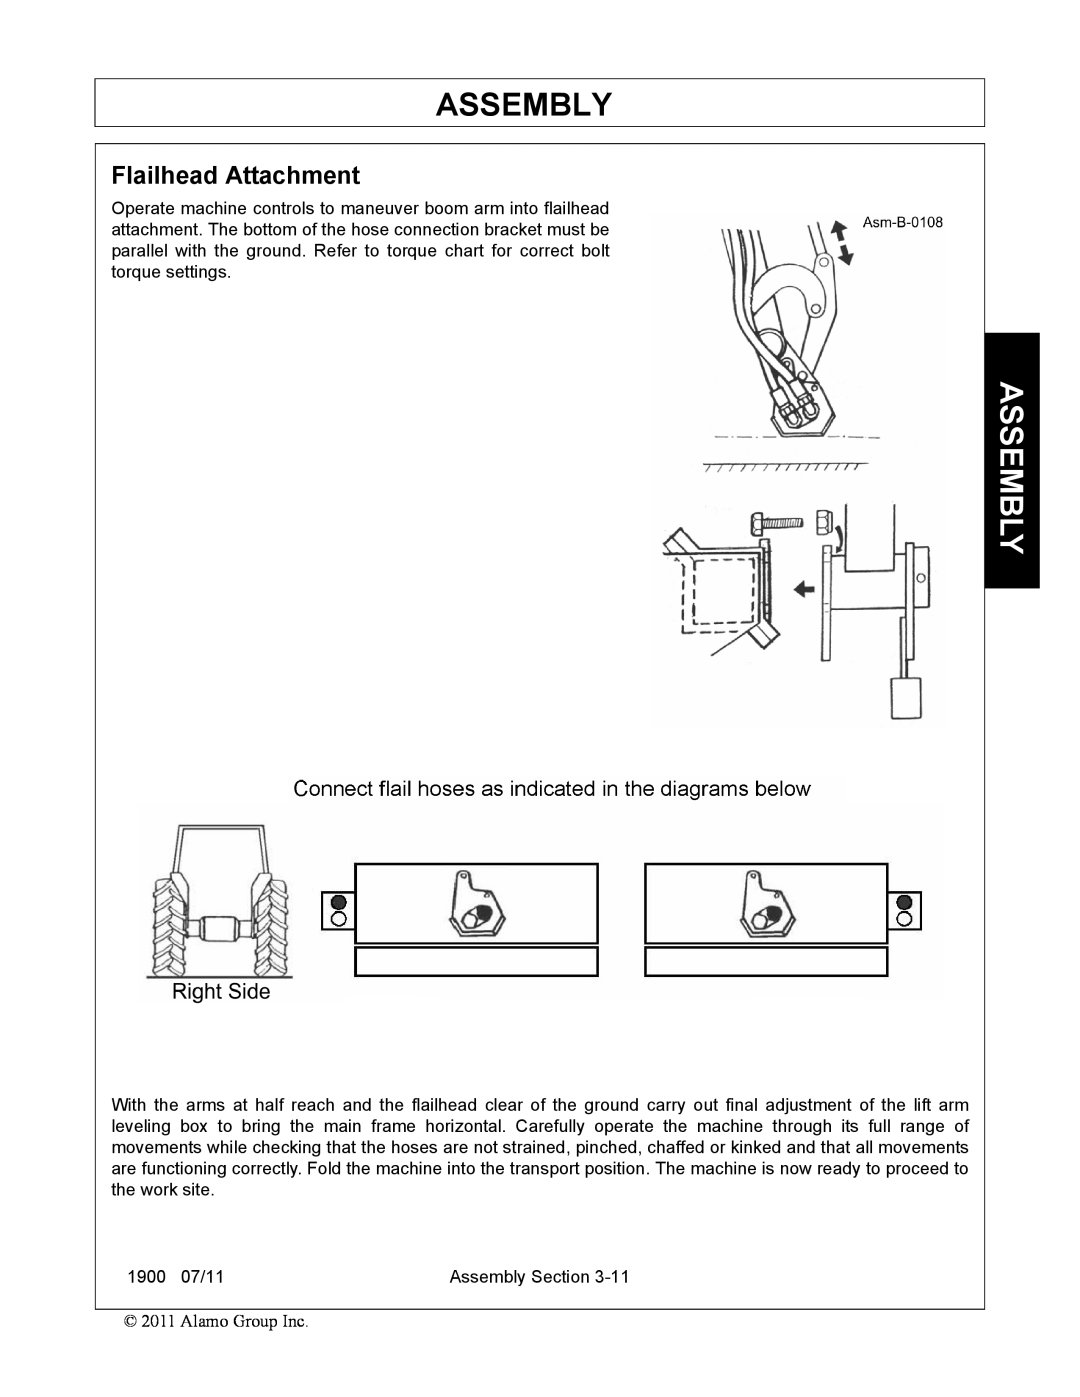 Alamo 1900 manual Flailhead Attachment, Assembly 